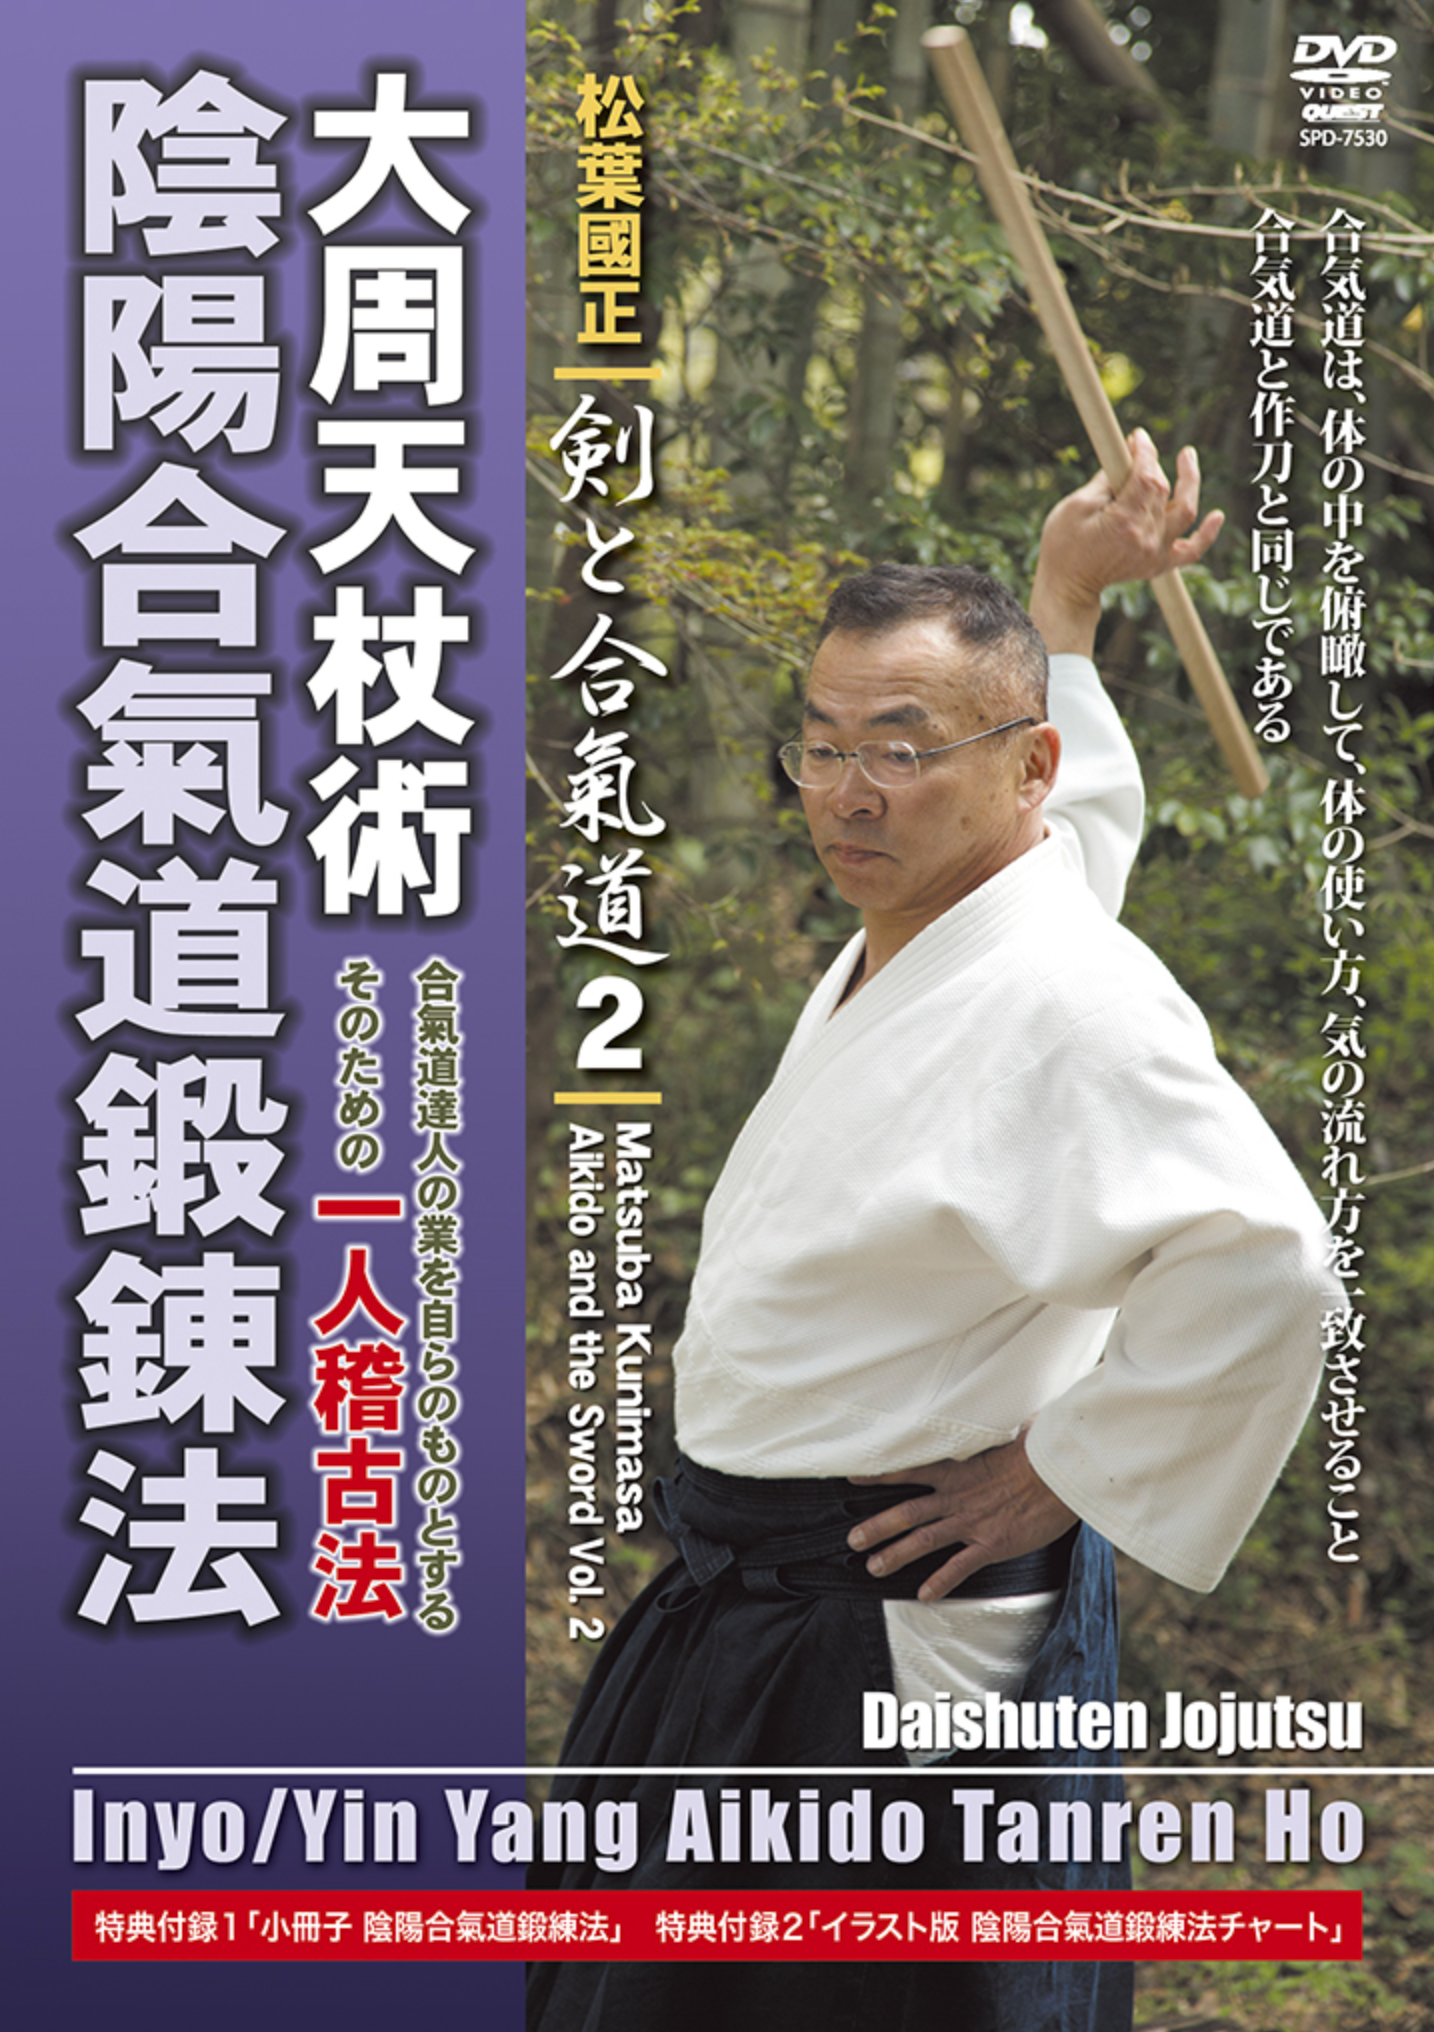 Yin Yang Aikido Tanren Ho DVD with Kunimasa Matsuba - Budovideos Inc